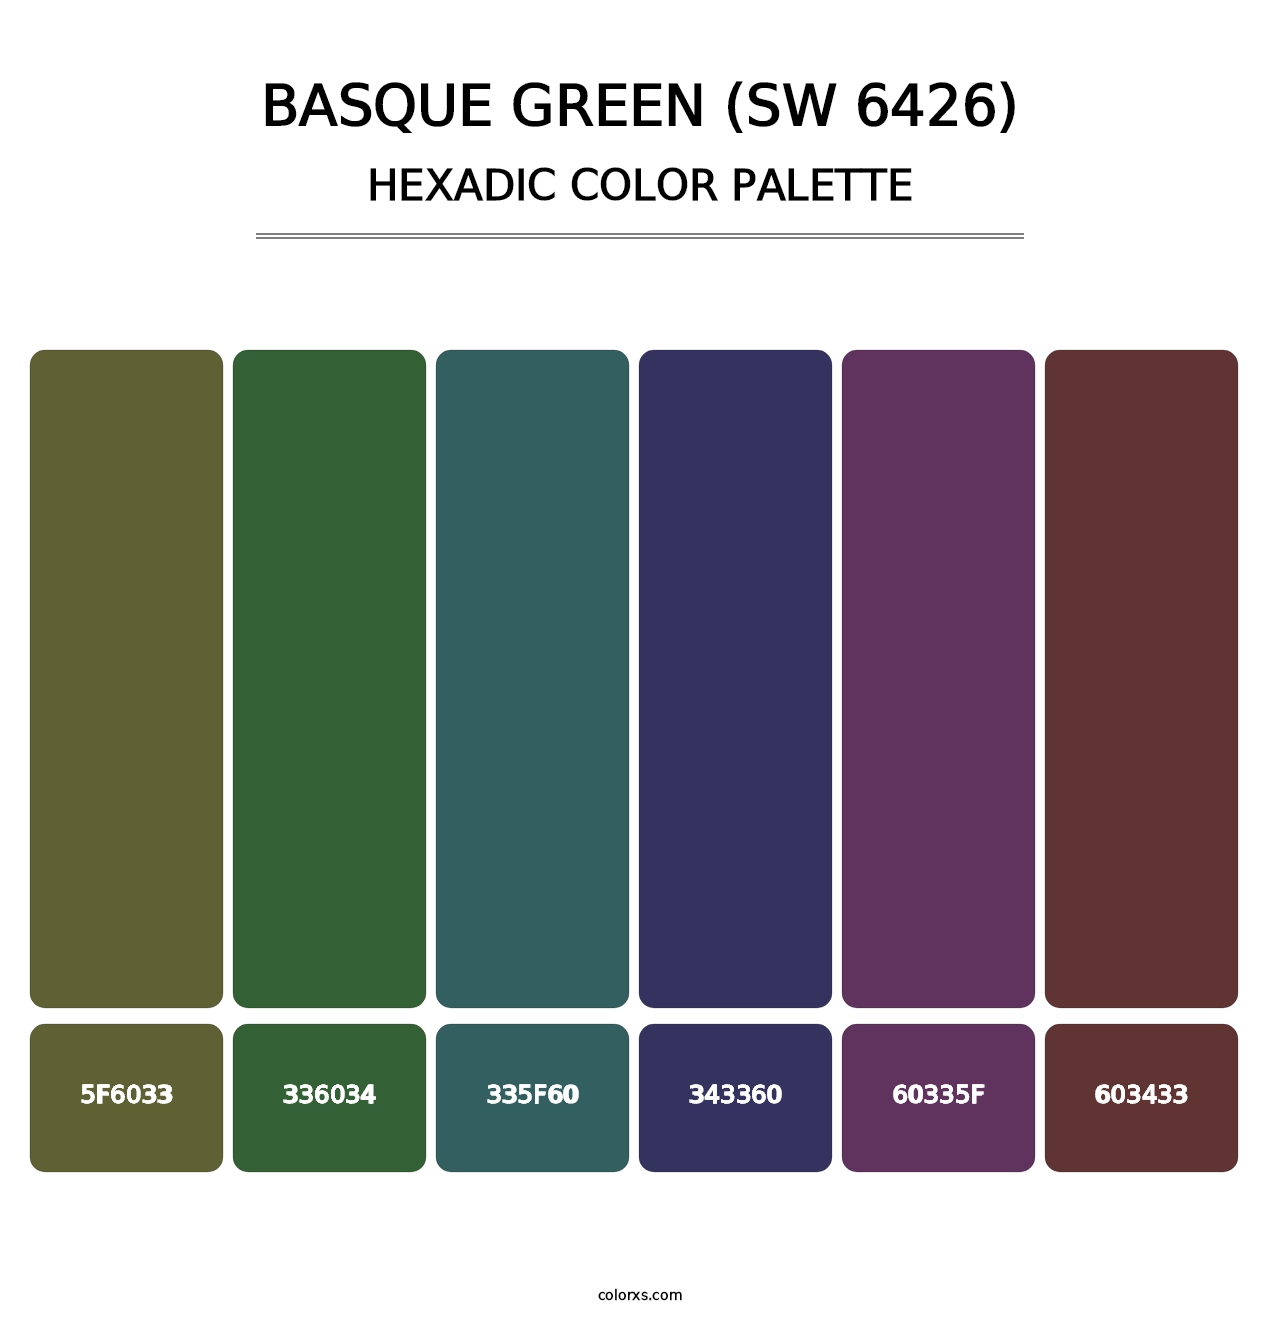 Basque Green (SW 6426) - Hexadic Color Palette